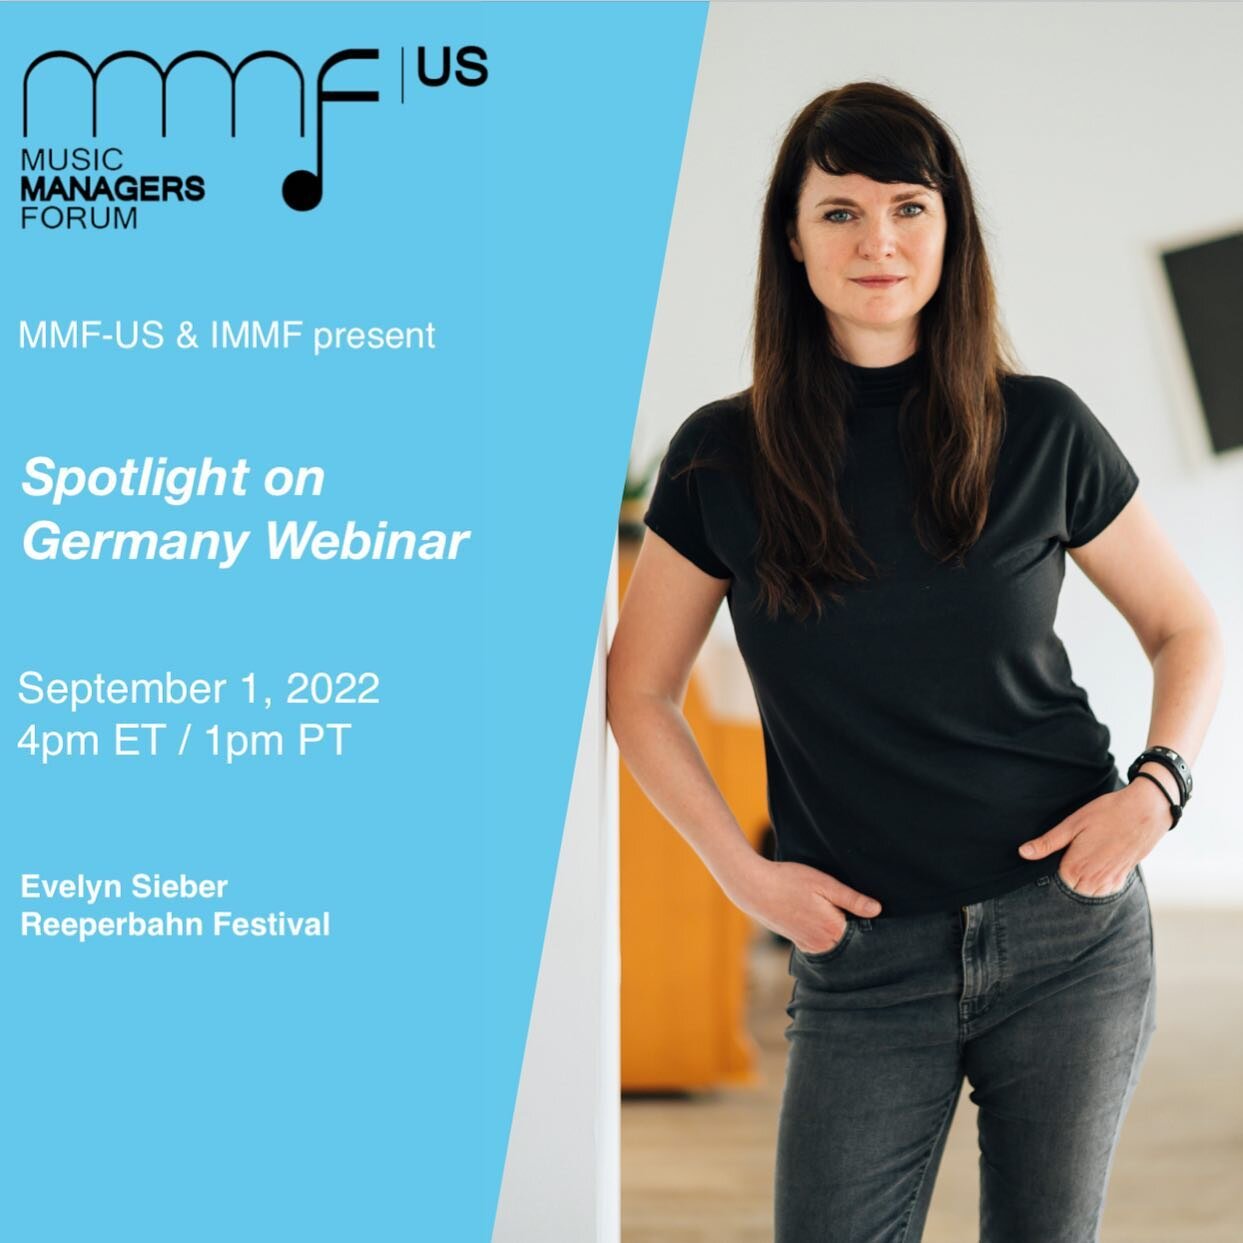 Come see Evelyn Sieber at MMF-US &amp; IMMF: Spotlight on Germany&nbsp;Webinar Thursday, September 1st at 4pm EST. Join us for a spotlight on the music giant: Germany
RSVP: https://us06web.zoom.us/webinar/register/WN_hKpfNJyrSLyA98iugK1jaw